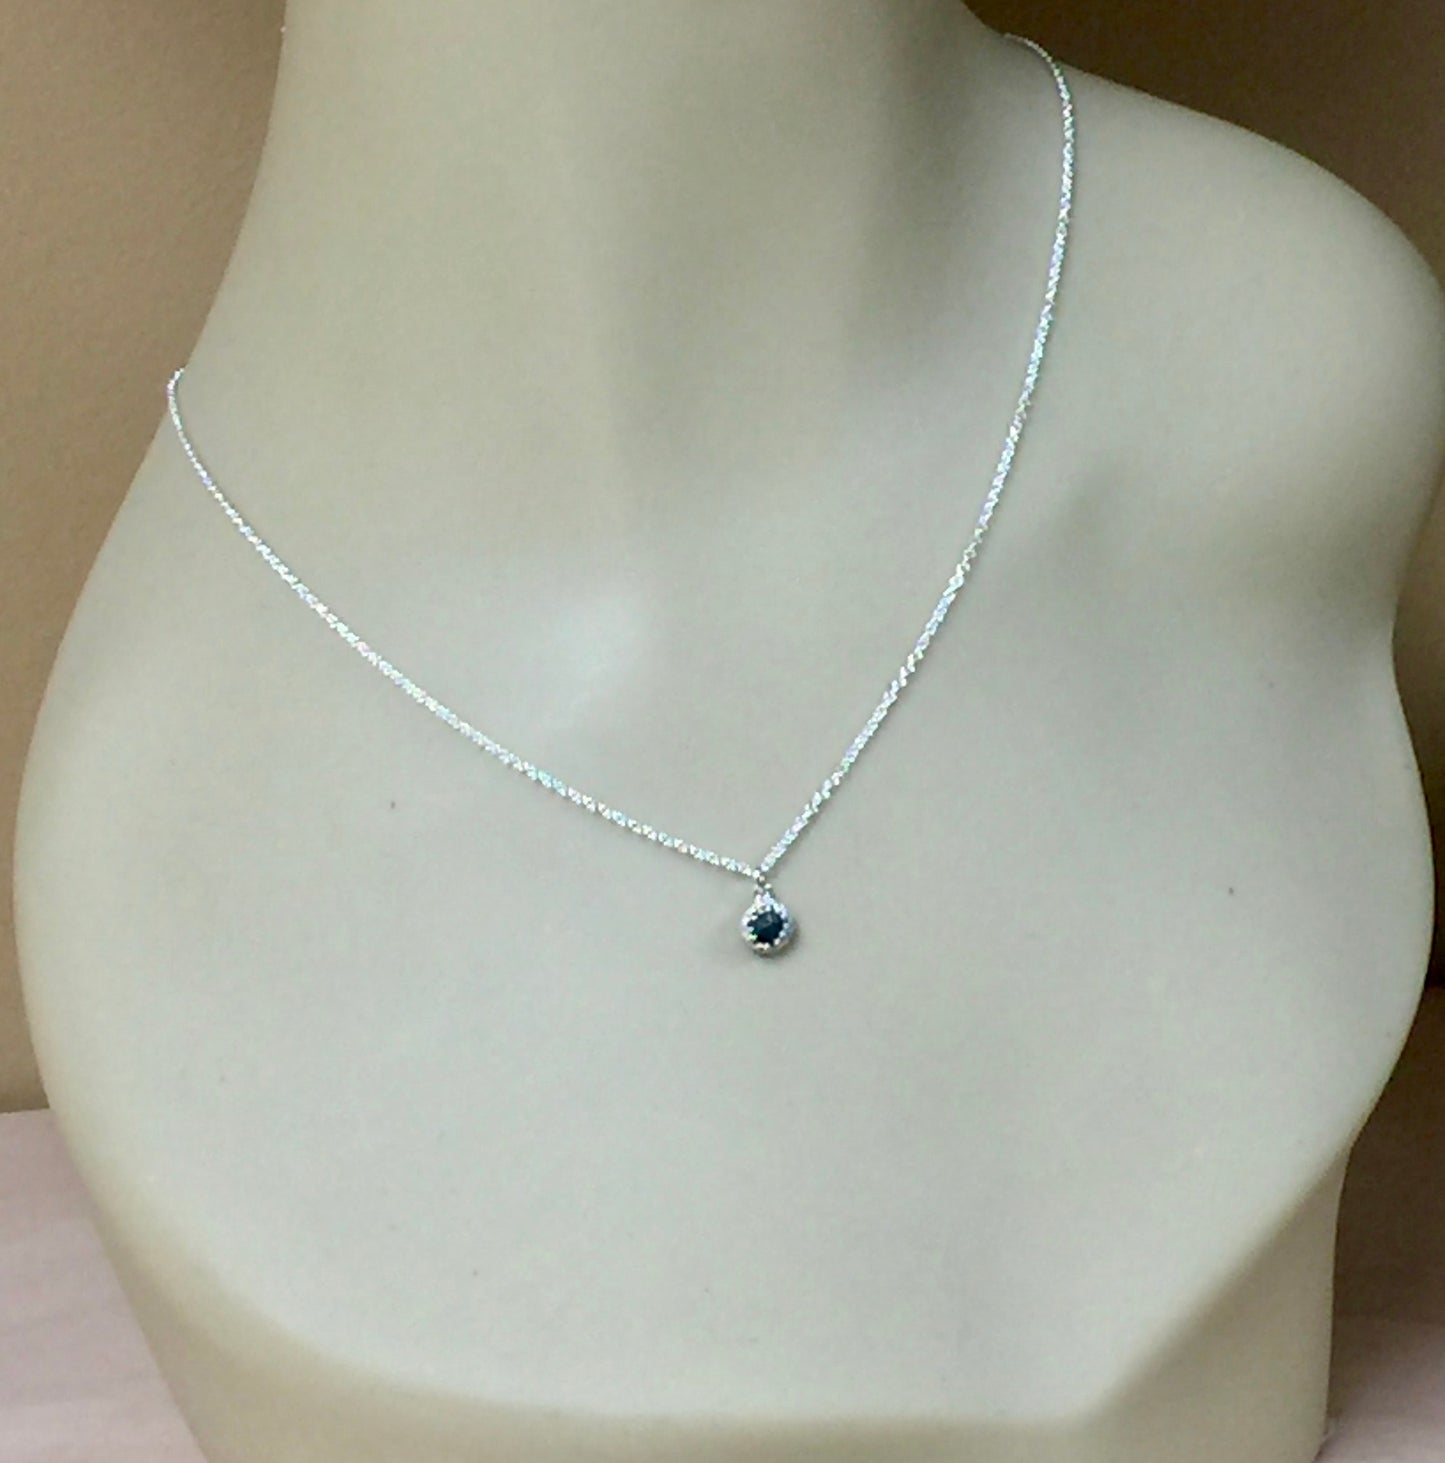 Montana Sapphire Pendant - Sterling Silver Necklace - September Birthstone - Uncut Raw Montana Sapphire